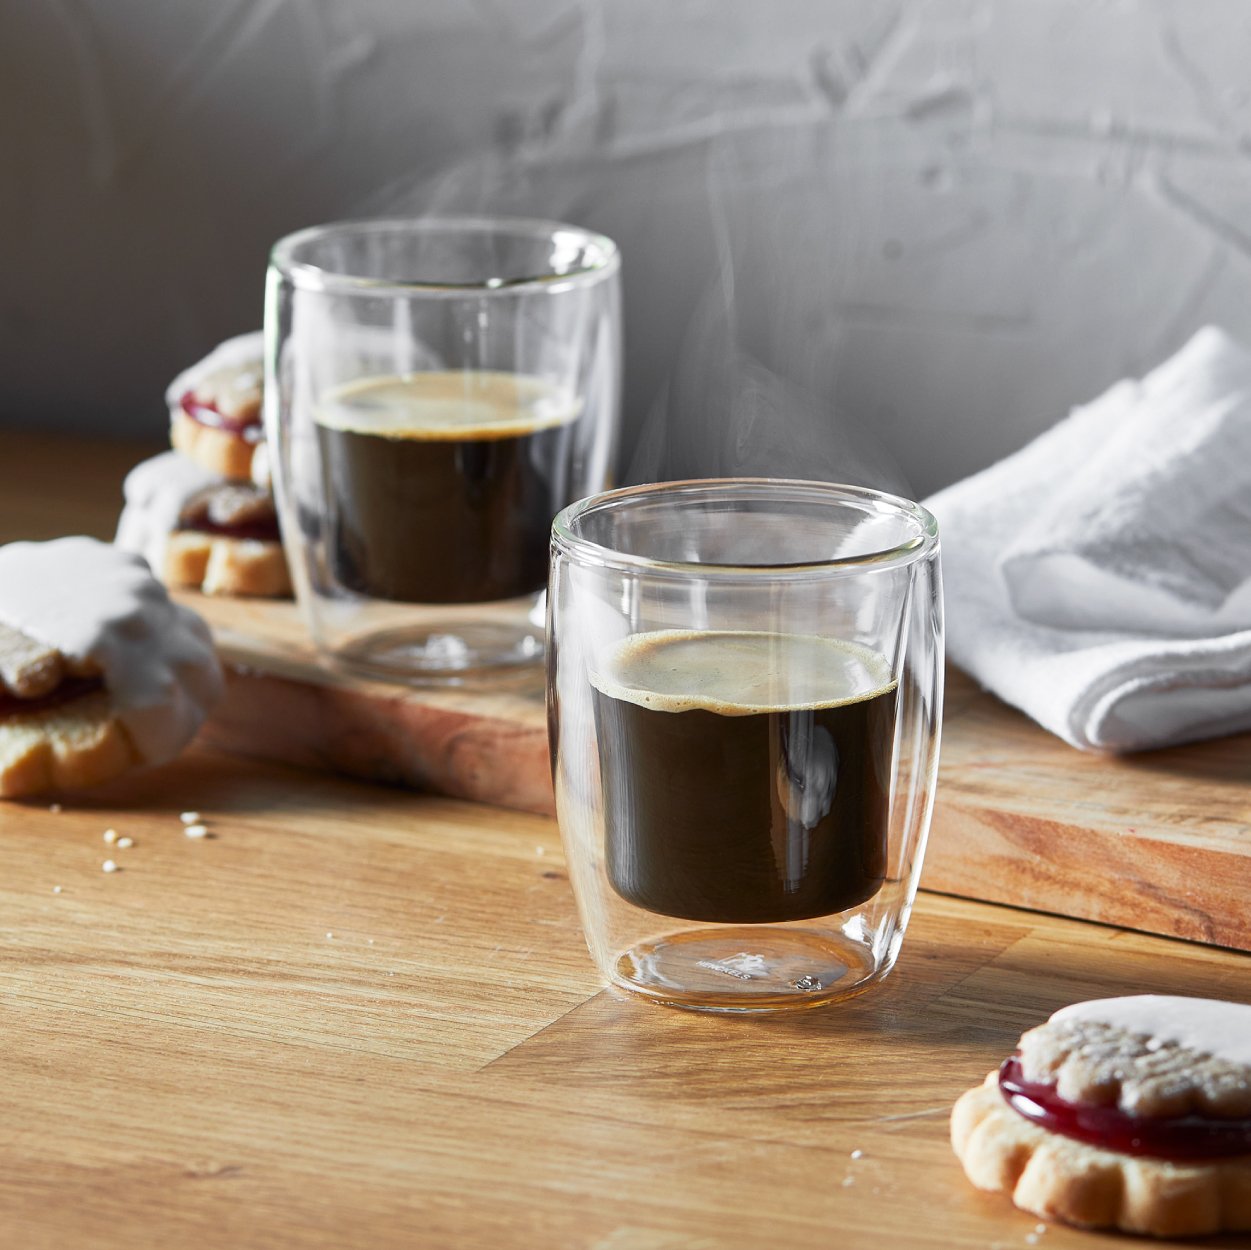 ZWILLING - SORRENTO PLUS 4-PC DOUBLE-WALL GLASS COFFEE MUG SET